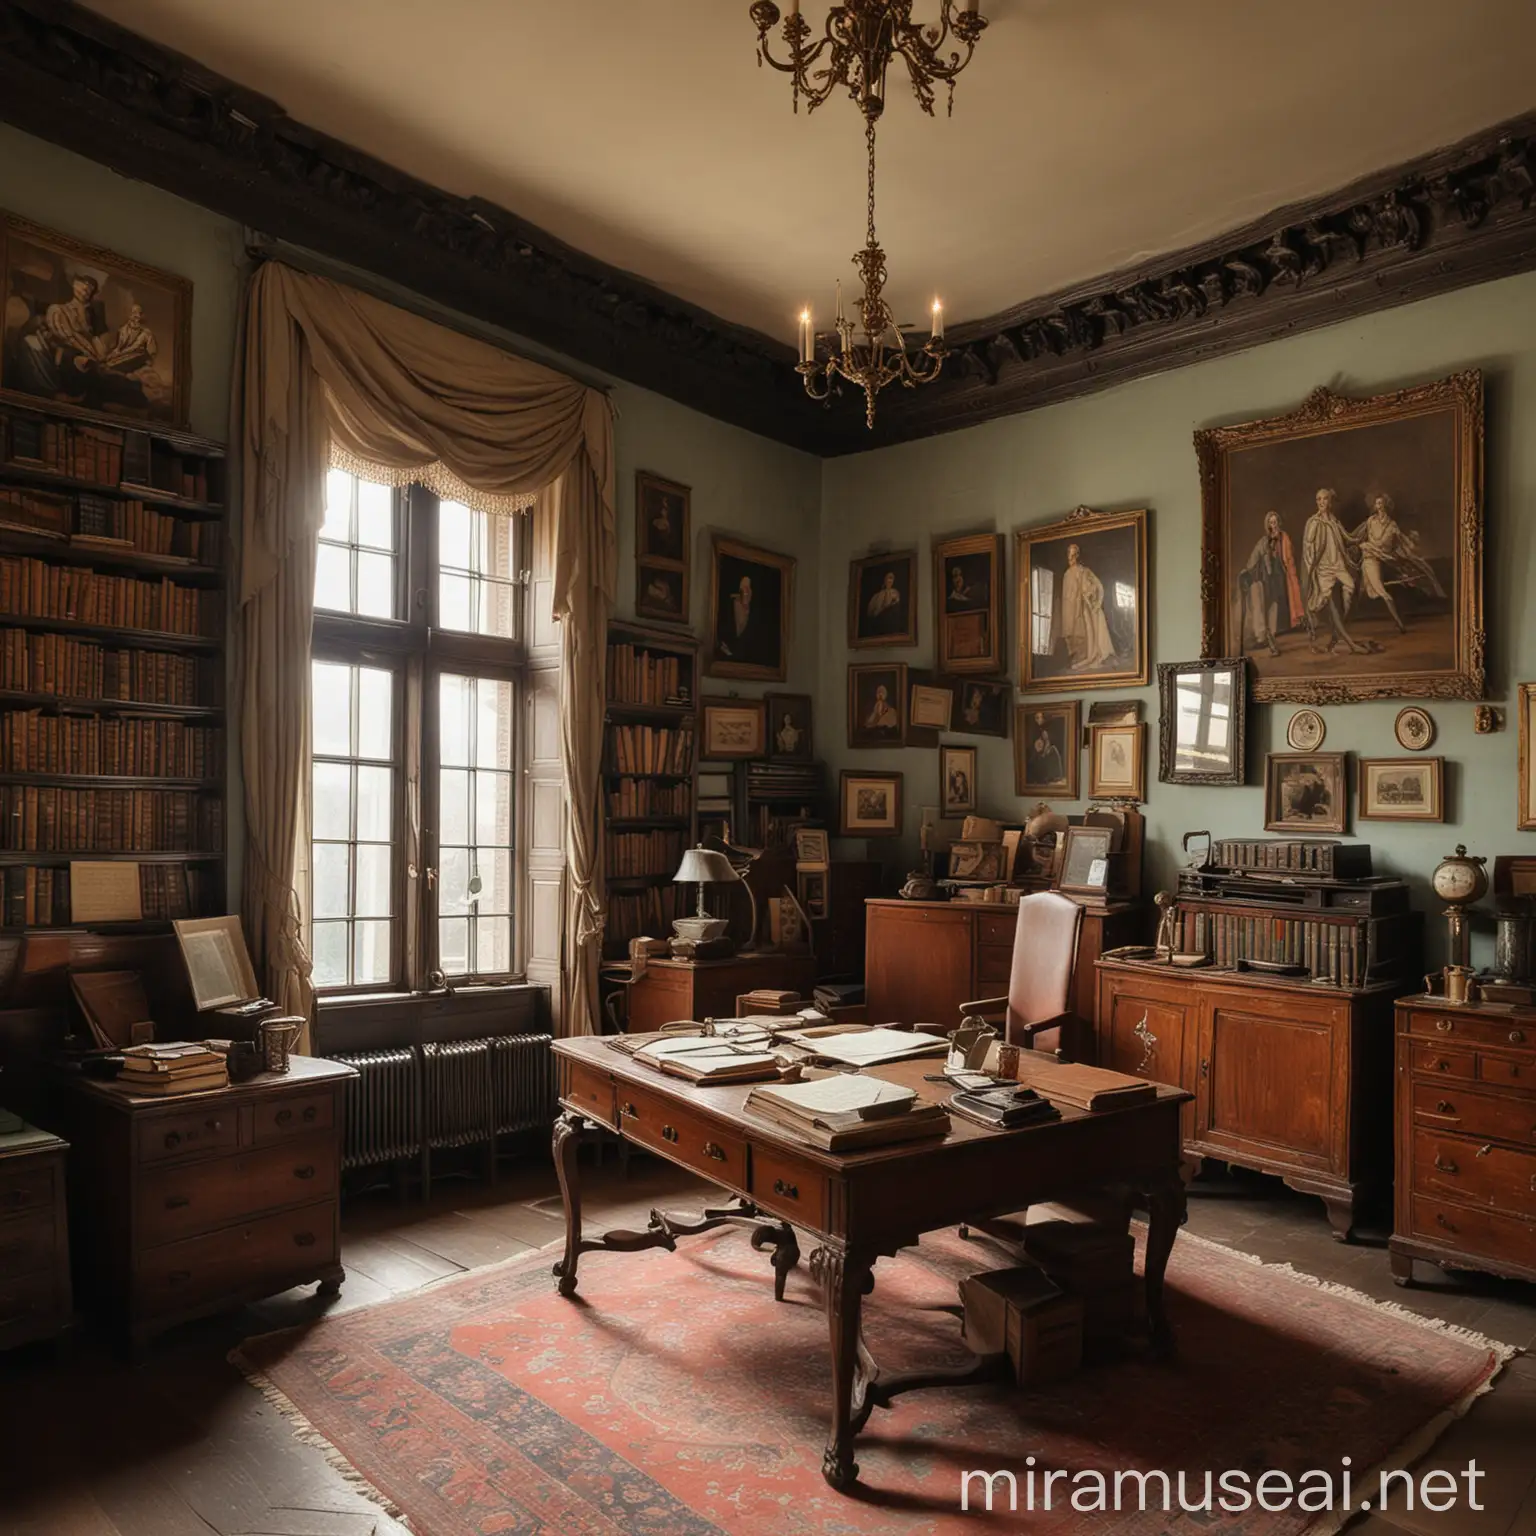 An 18th century scholar's office